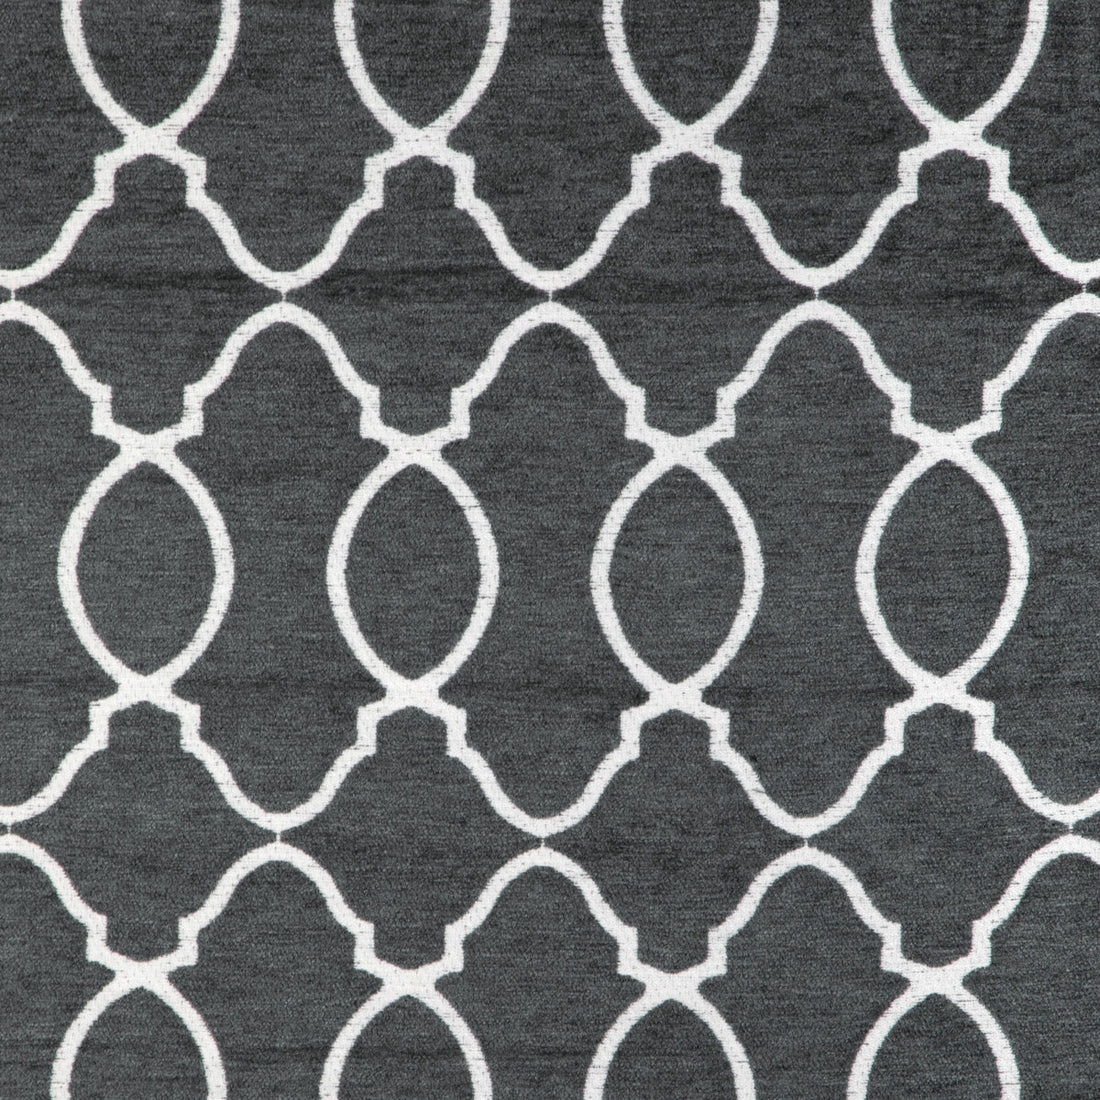 Kravet Design fabric in 36795-21 color - pattern 36795.21.0 - by Kravet Design in the Sea Island Indoor/Outdoor collection